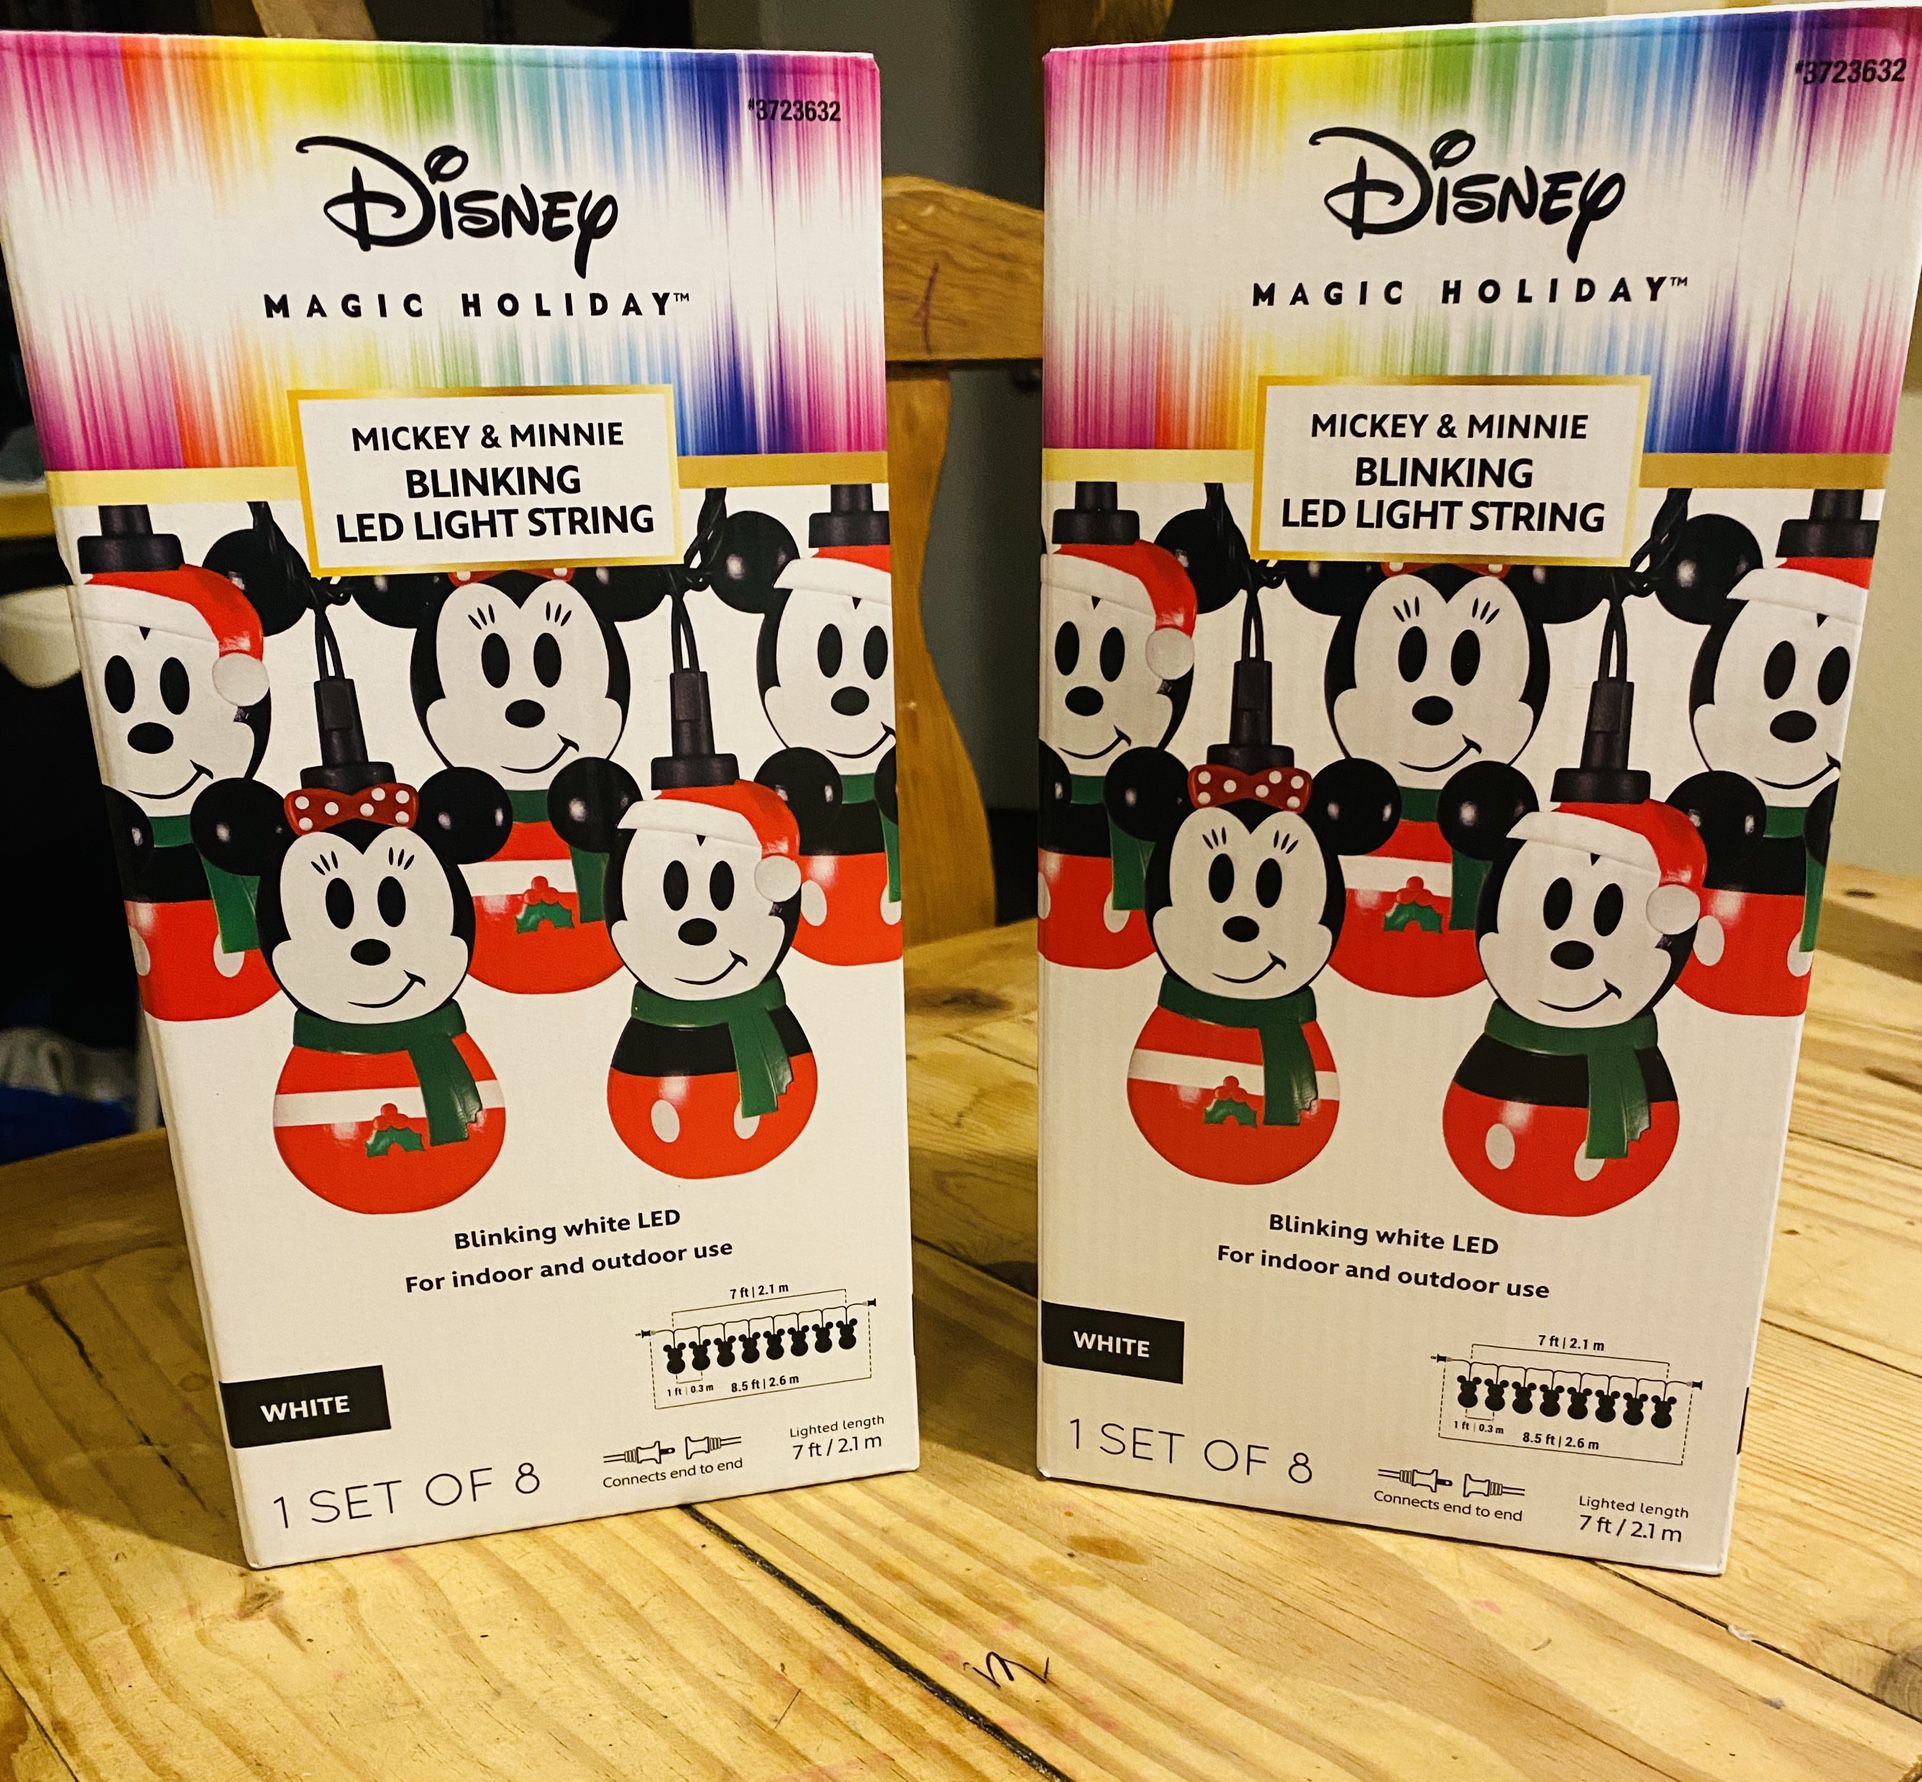 Disney Magic Holiday Mickey & Minnie Blinking LED Light Strings 